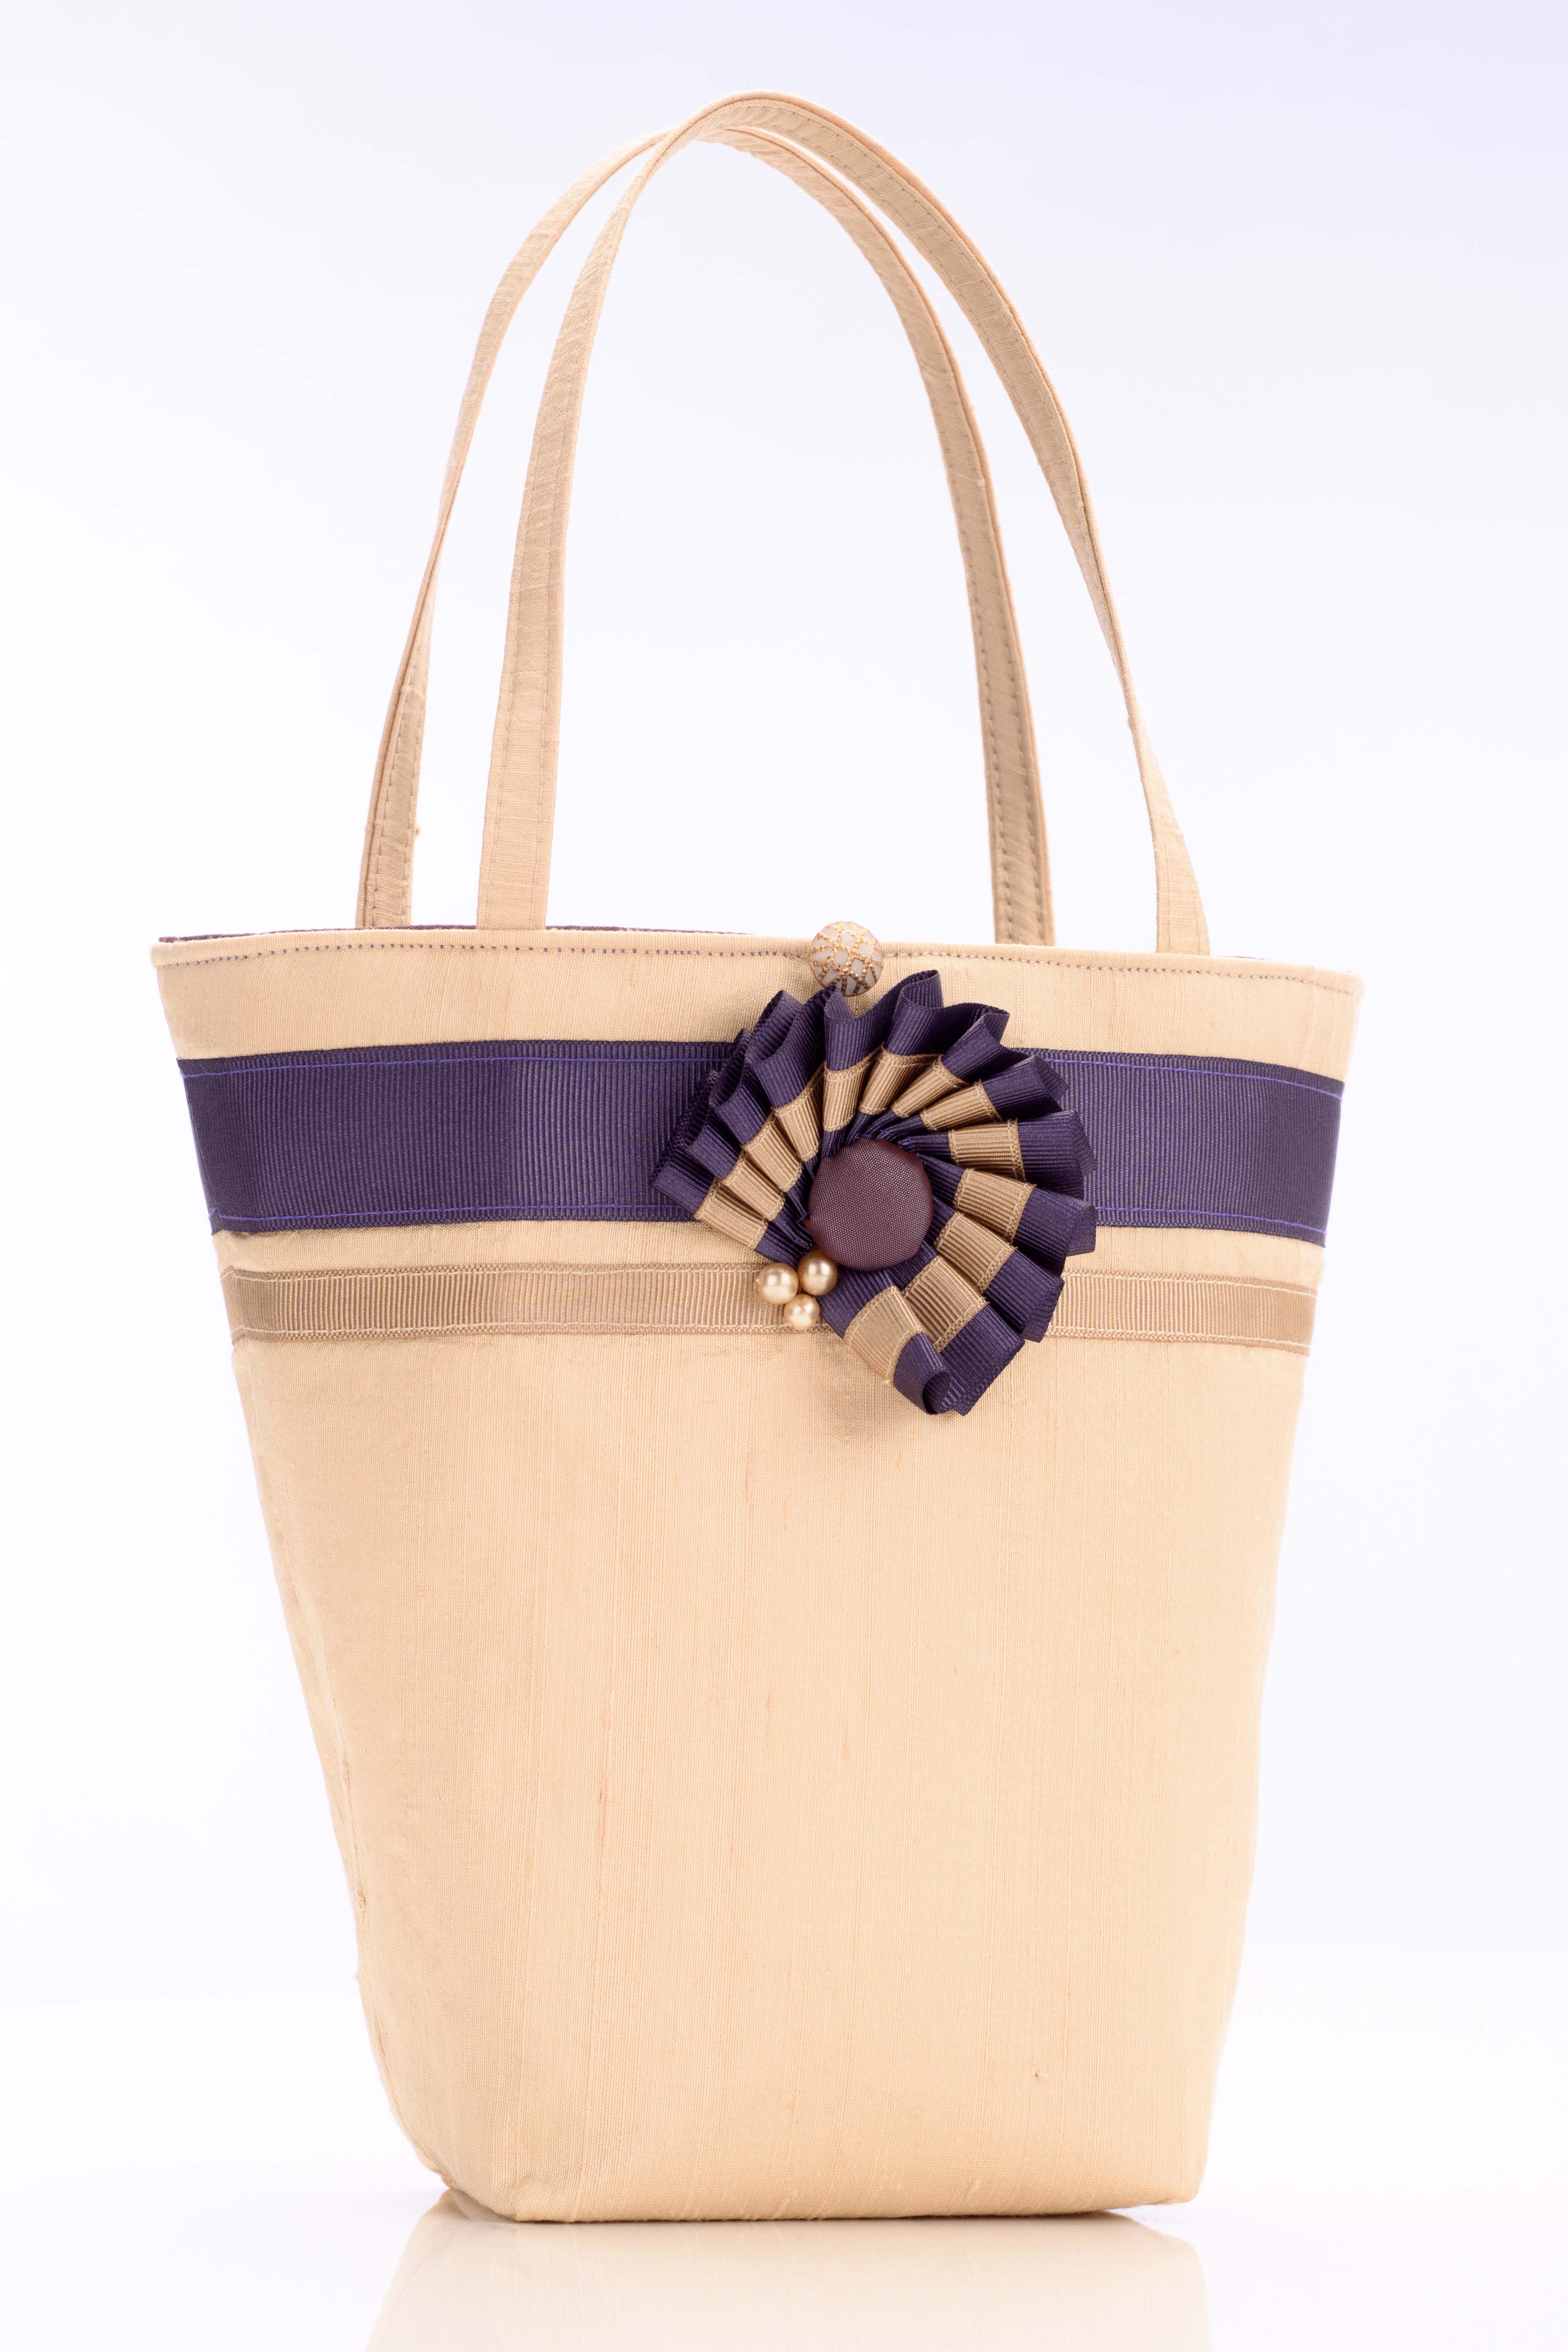 Cream silk handbag with purple ribbon trim